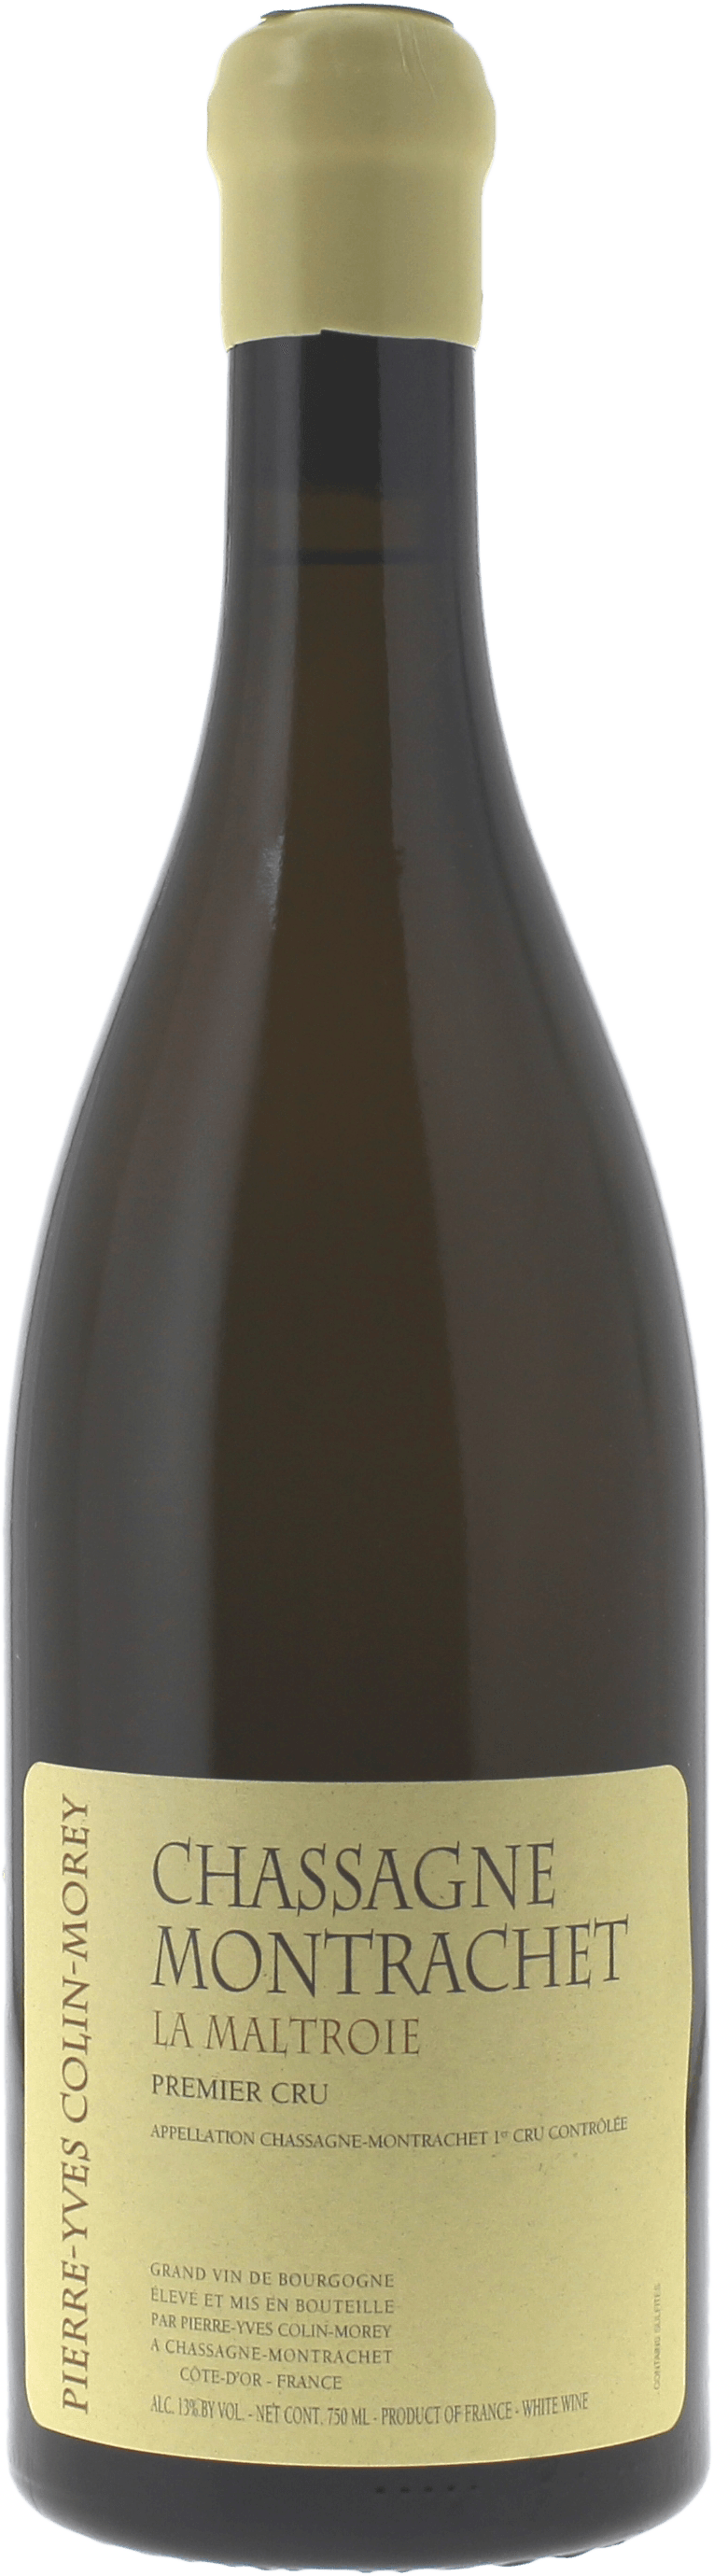 Chassagne montrachet 1er cru maltroie 2017 Domaine COLIN MOREY, Bourgogne blanc